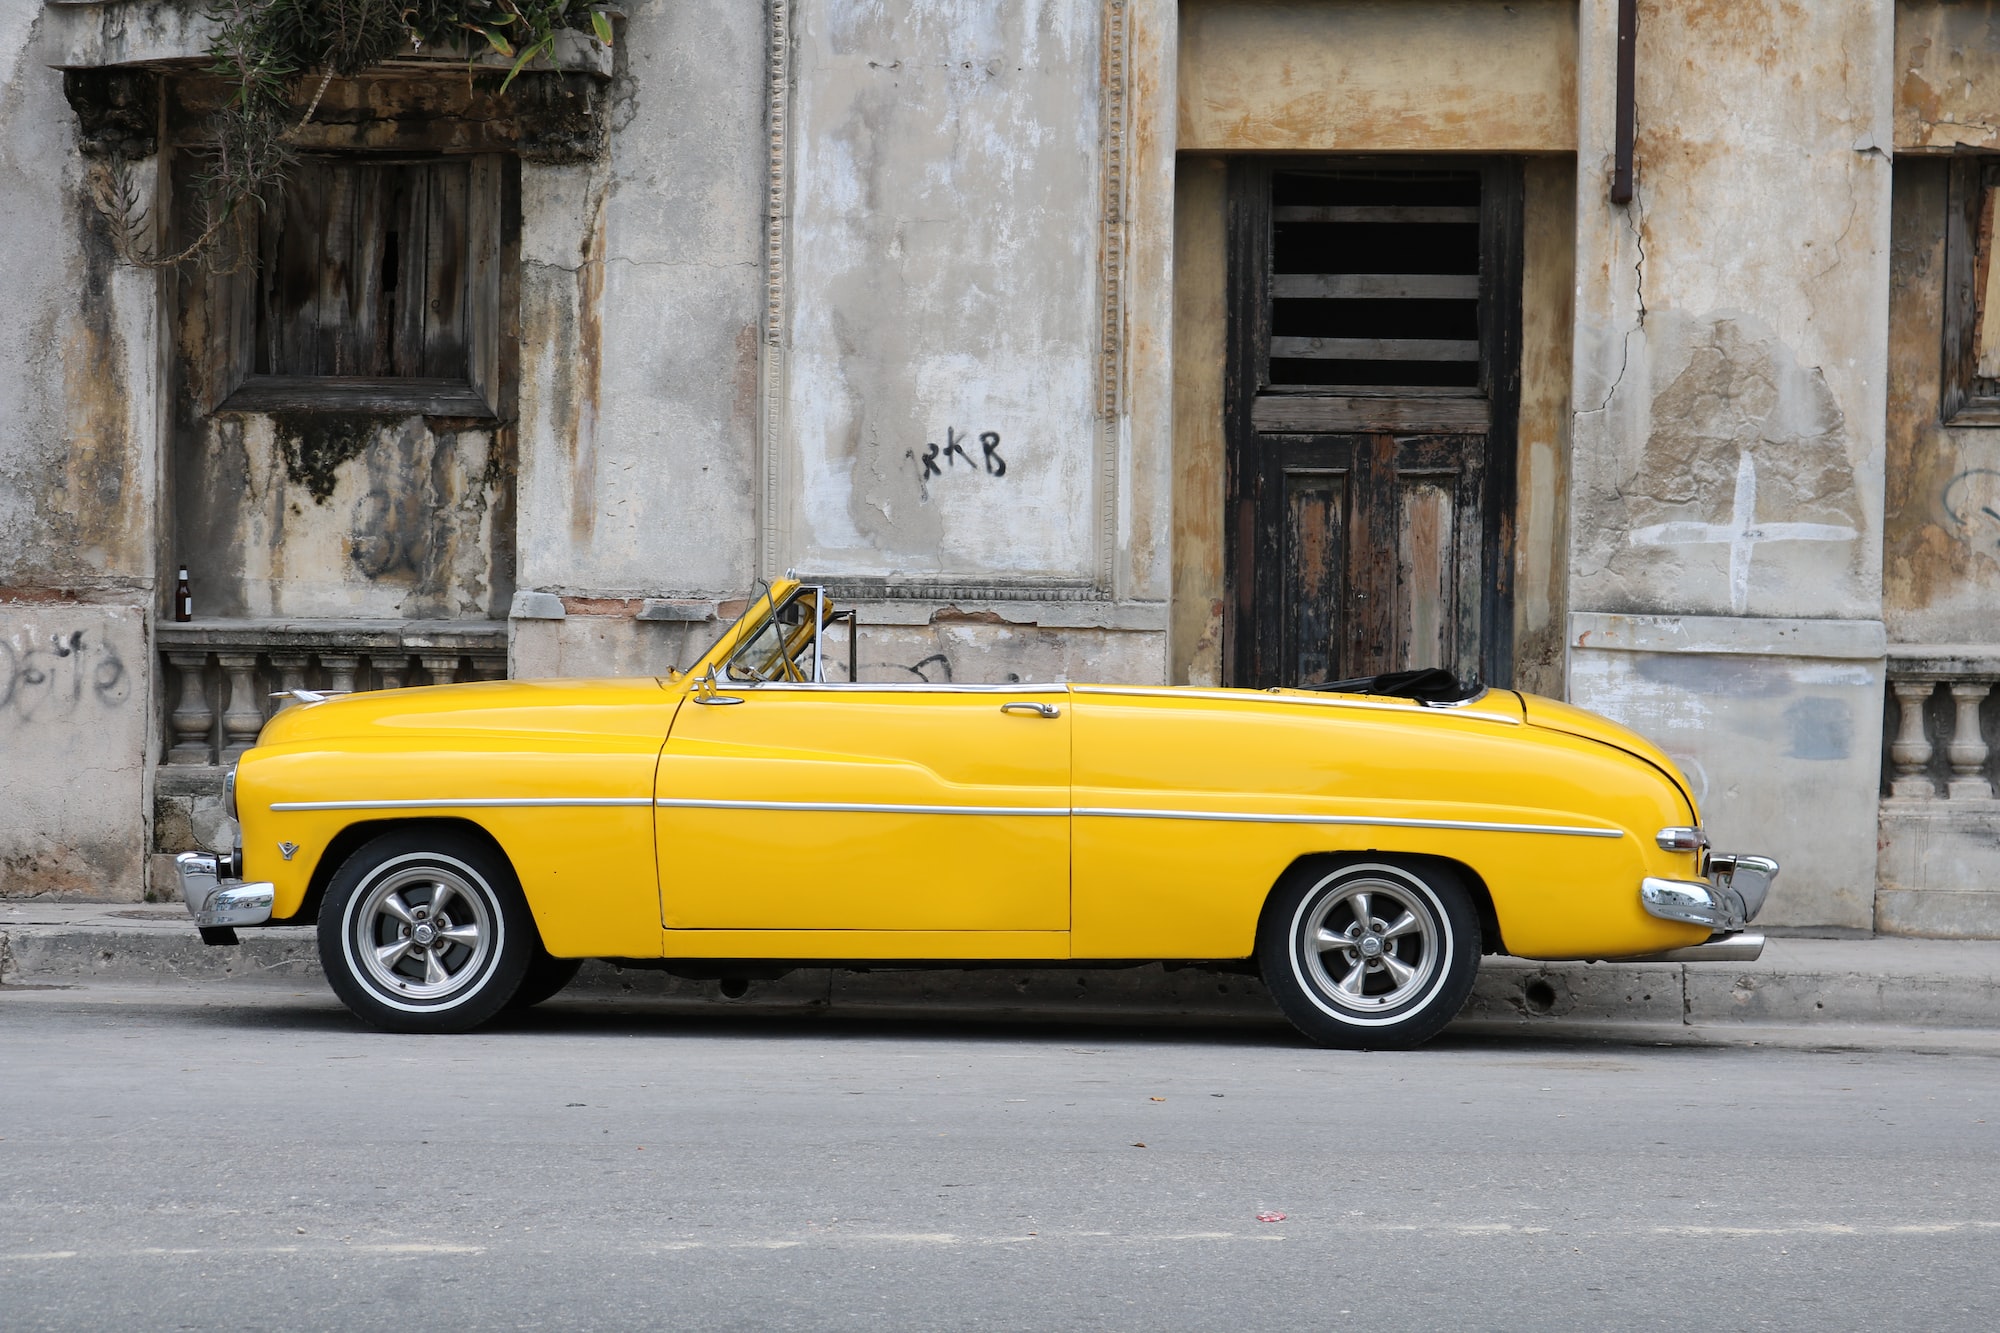 Coche convertible clásico amarillo frente al antiguo edificio de cemento